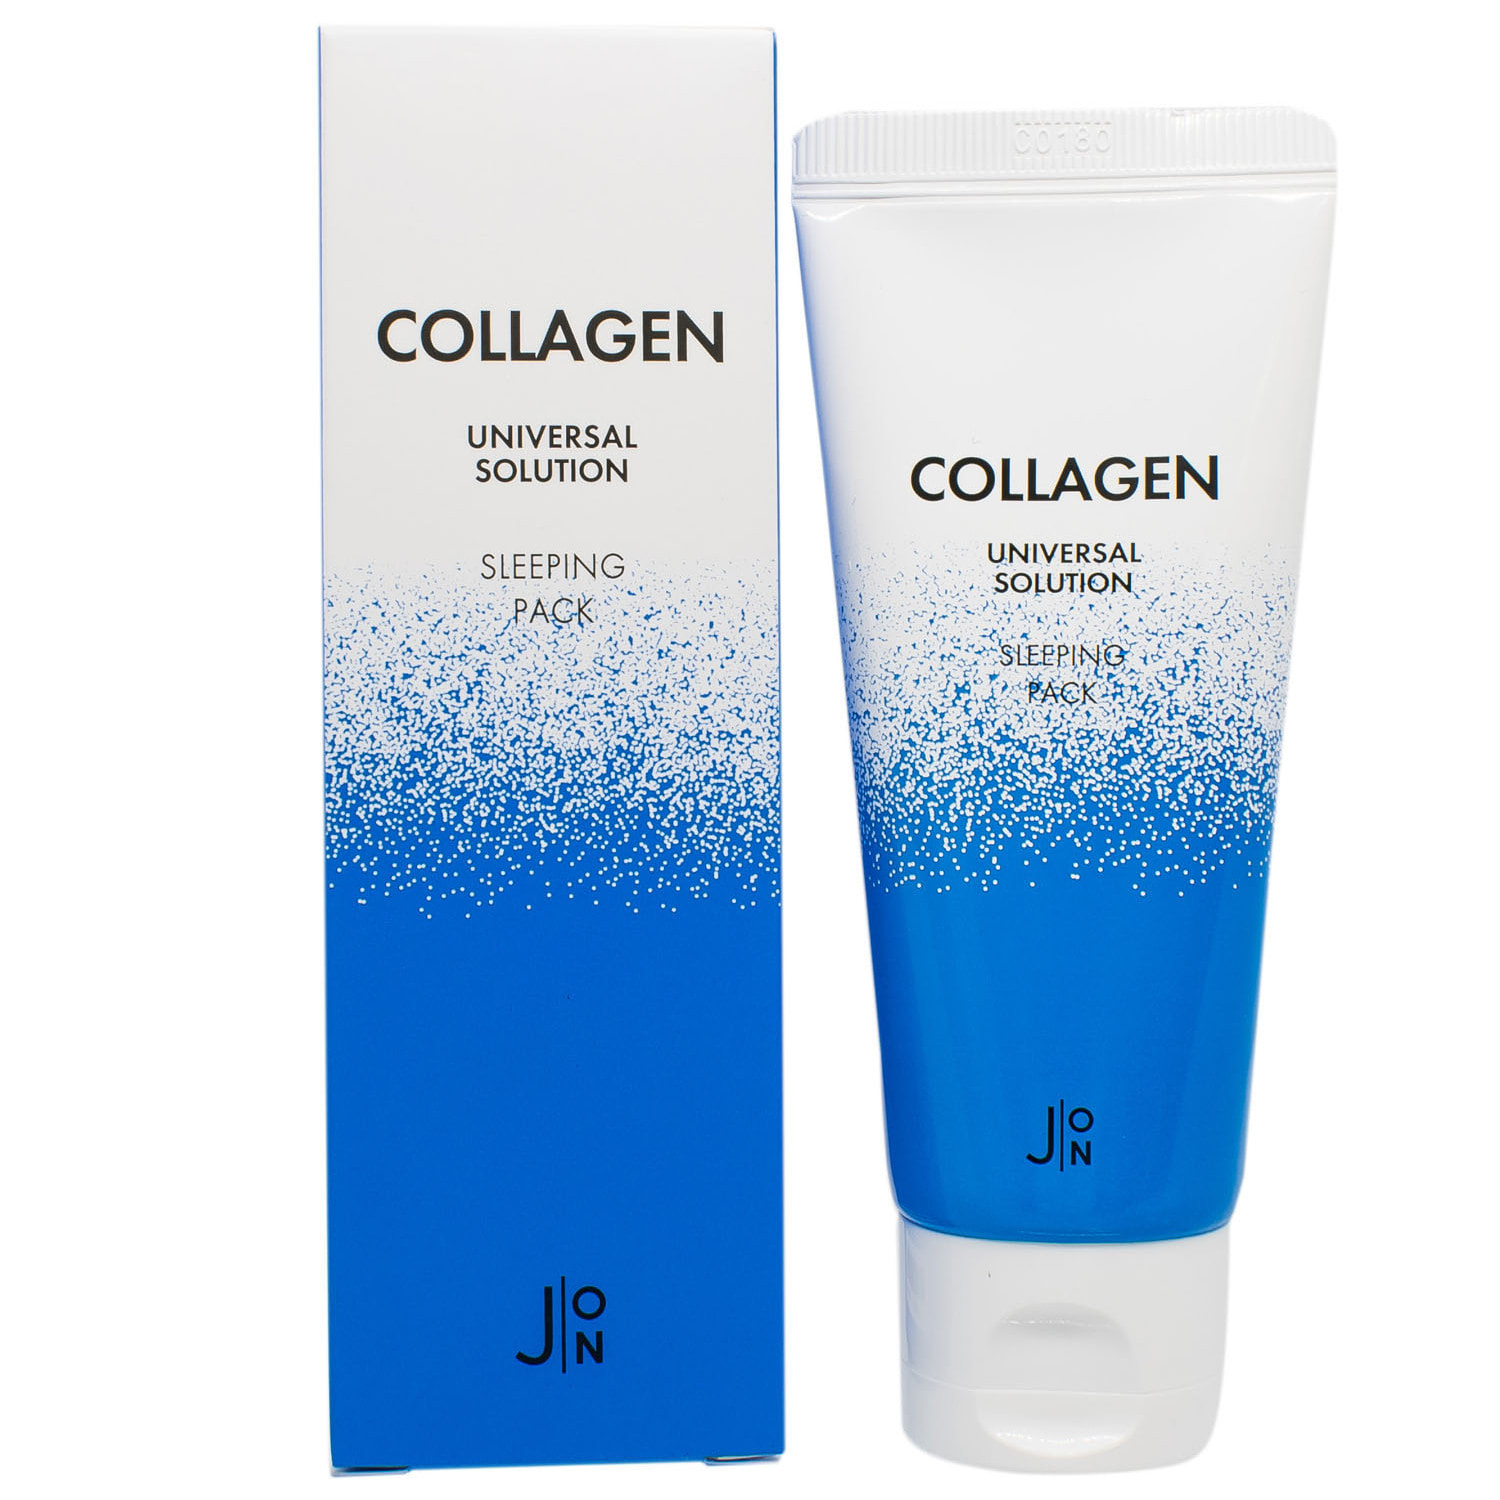 Ночная маска collagen. Маска коллаген Джион. Collagen Universal solution sleeping Pack. Jon Collagen ночная маска. Collagen маска для лица.